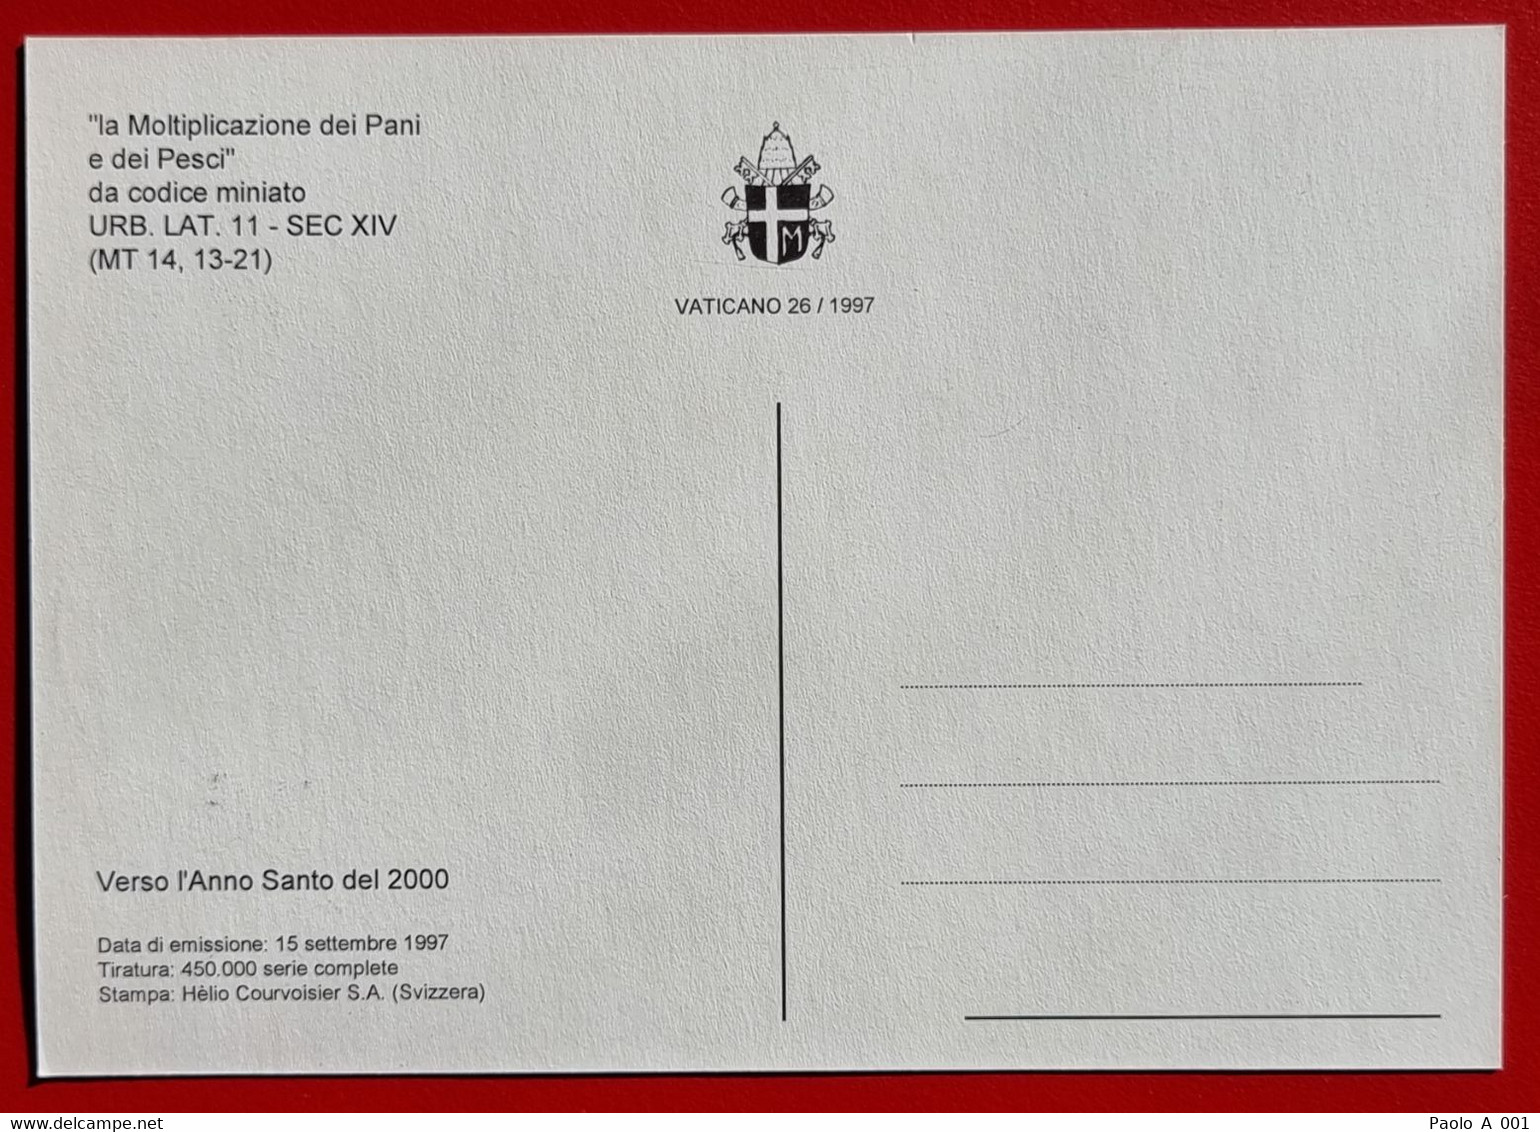 VATICANO VATIKAN VATICAN 1997 VERSO L'ANNO SANTO TOWARD THE HOLY YEAR 2000 MAXIMUM CARD - Covers & Documents